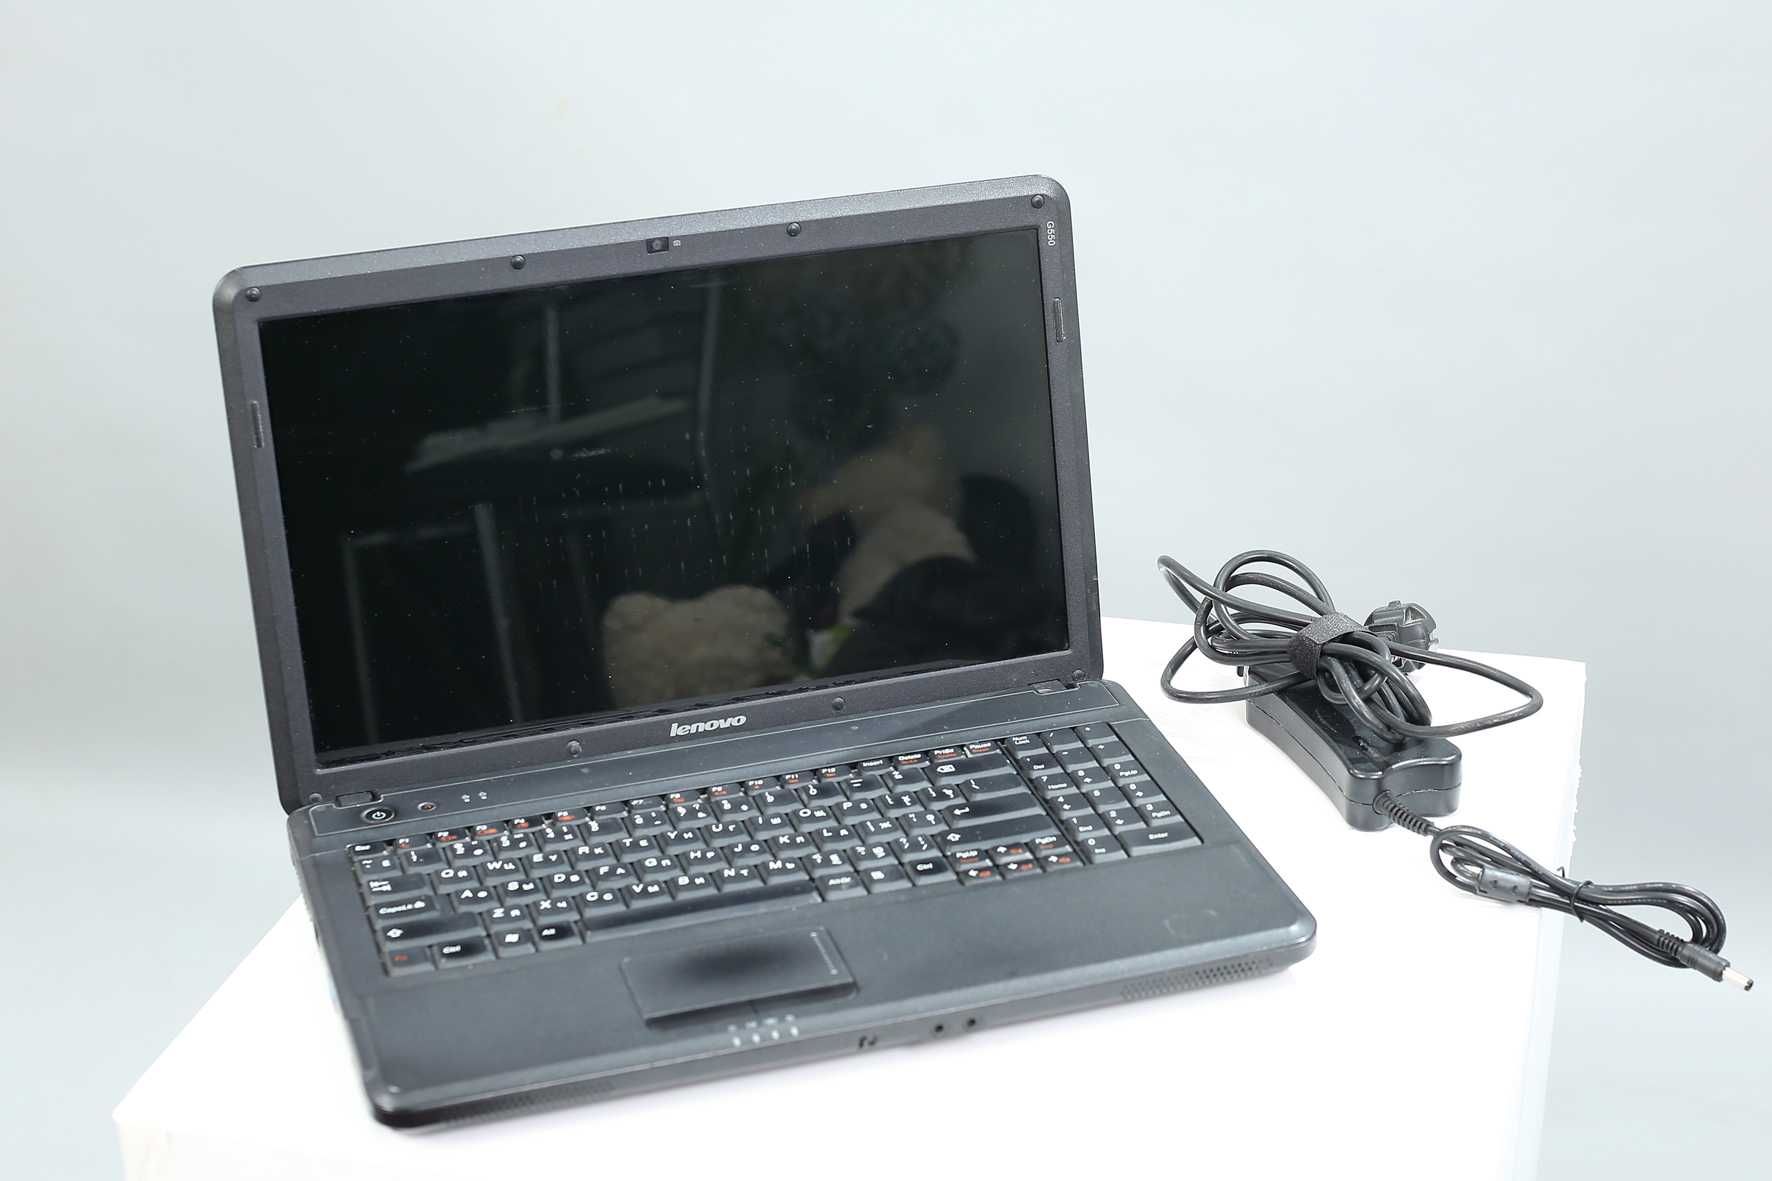 ноутбук Lenovo g550